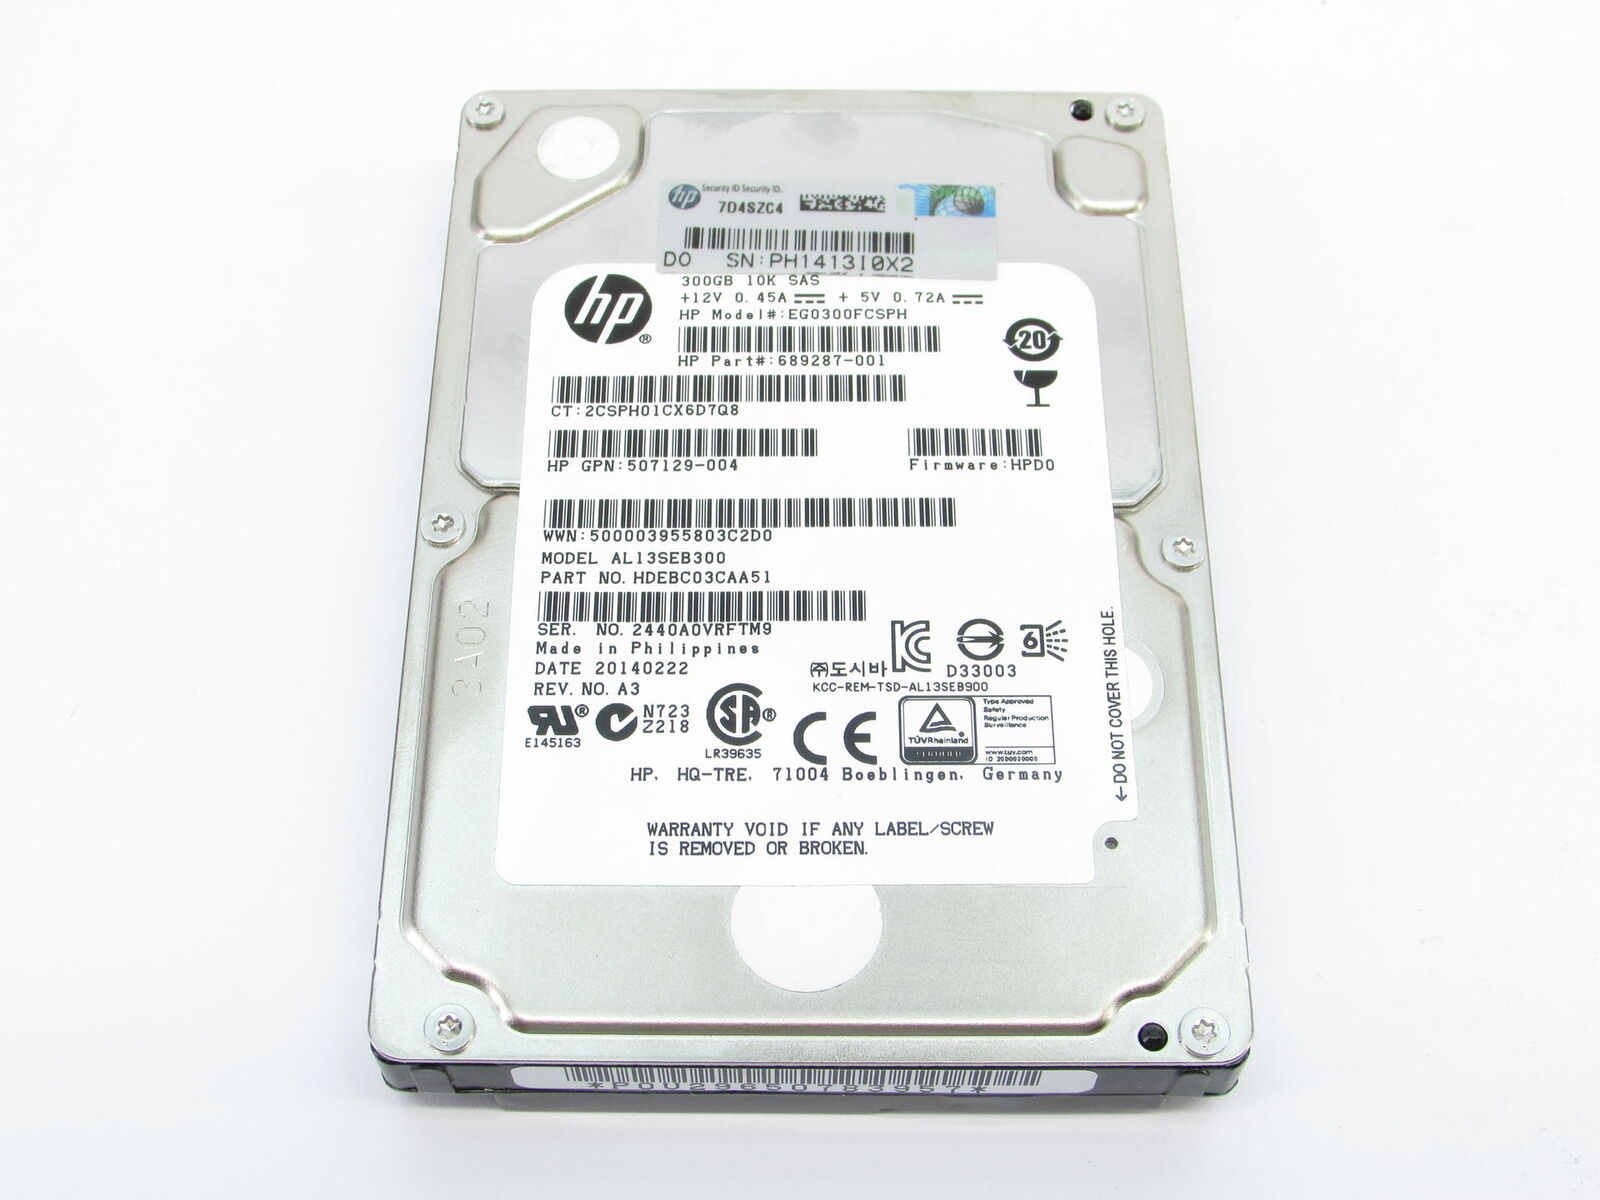 HPE 689287-001 300GB 10k 2.5” SAS 6Gbps 64mb Toshiba HDD Hard Drive Grade A